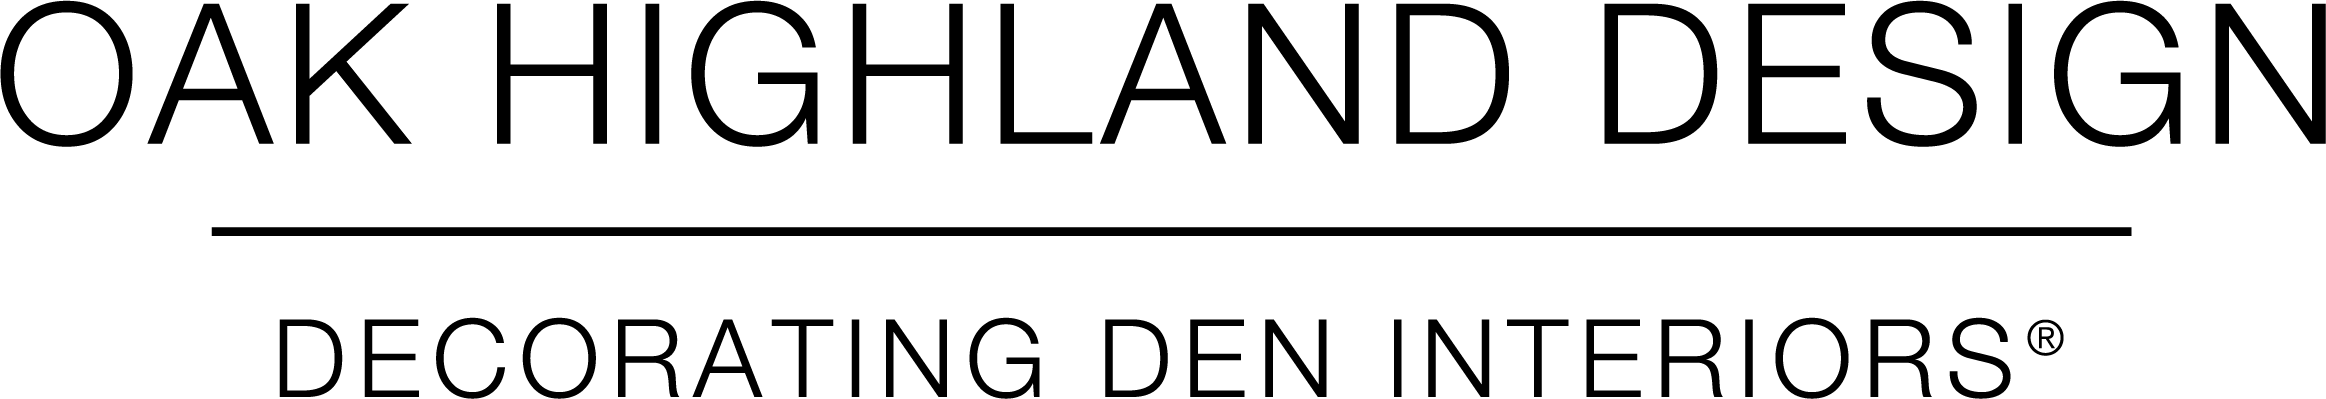 Oak Highland Design – Decorating Den Interiors